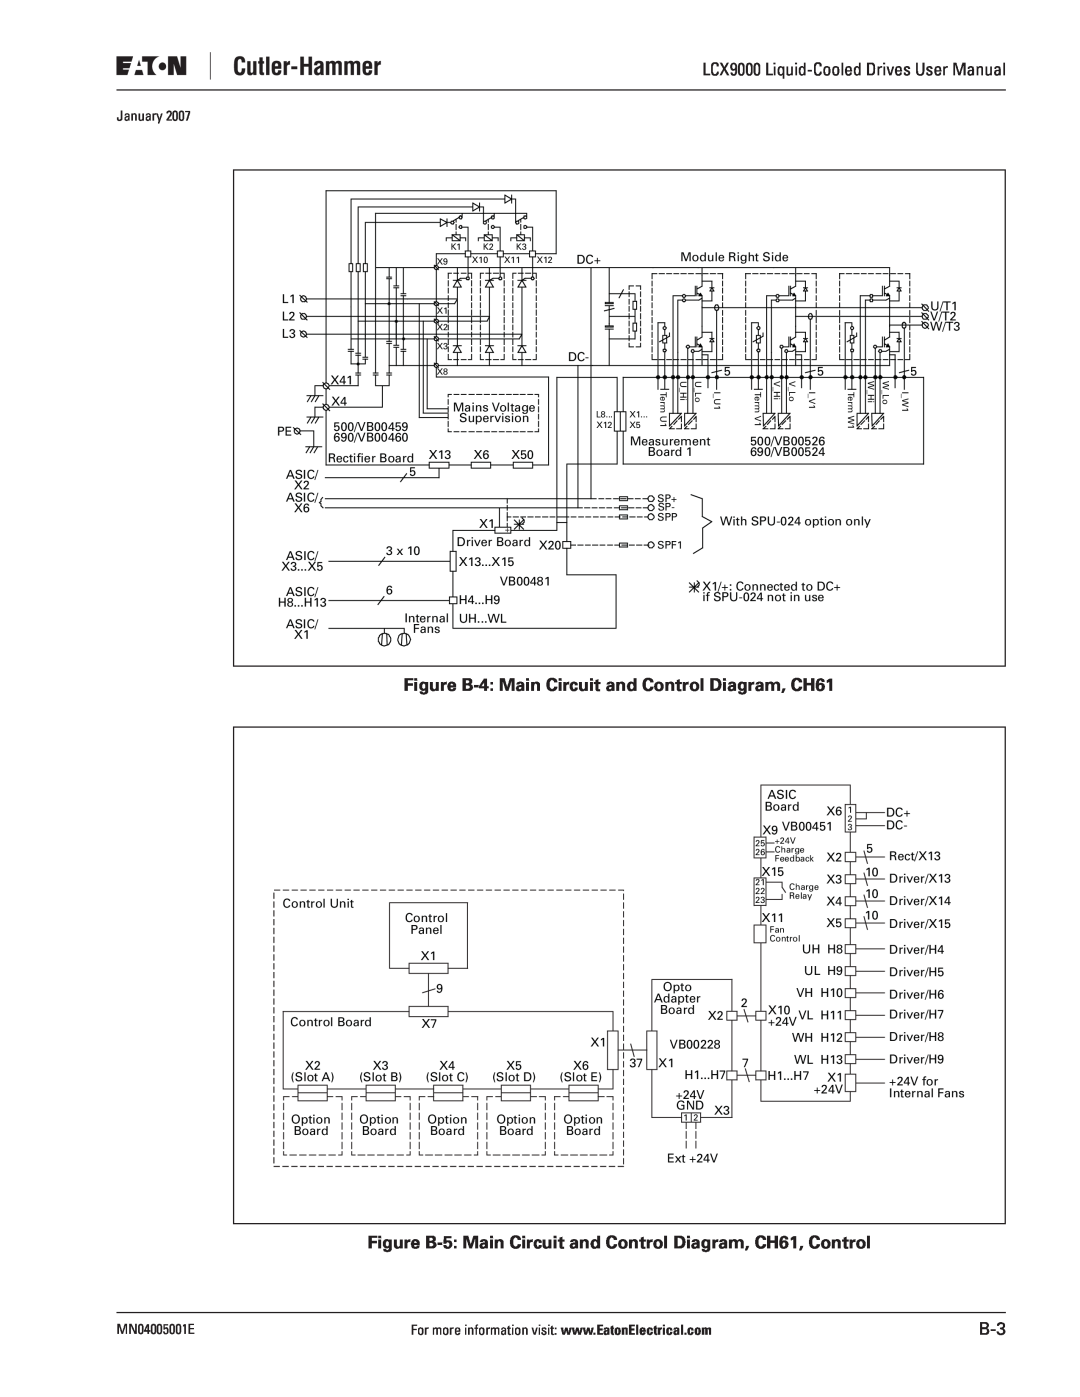 J. T. Eaton LCX9000 user manual Figure B-4 Main Circuit and Control Diagram, CH61, January, MN04005001E, SPF1, H8...H13 